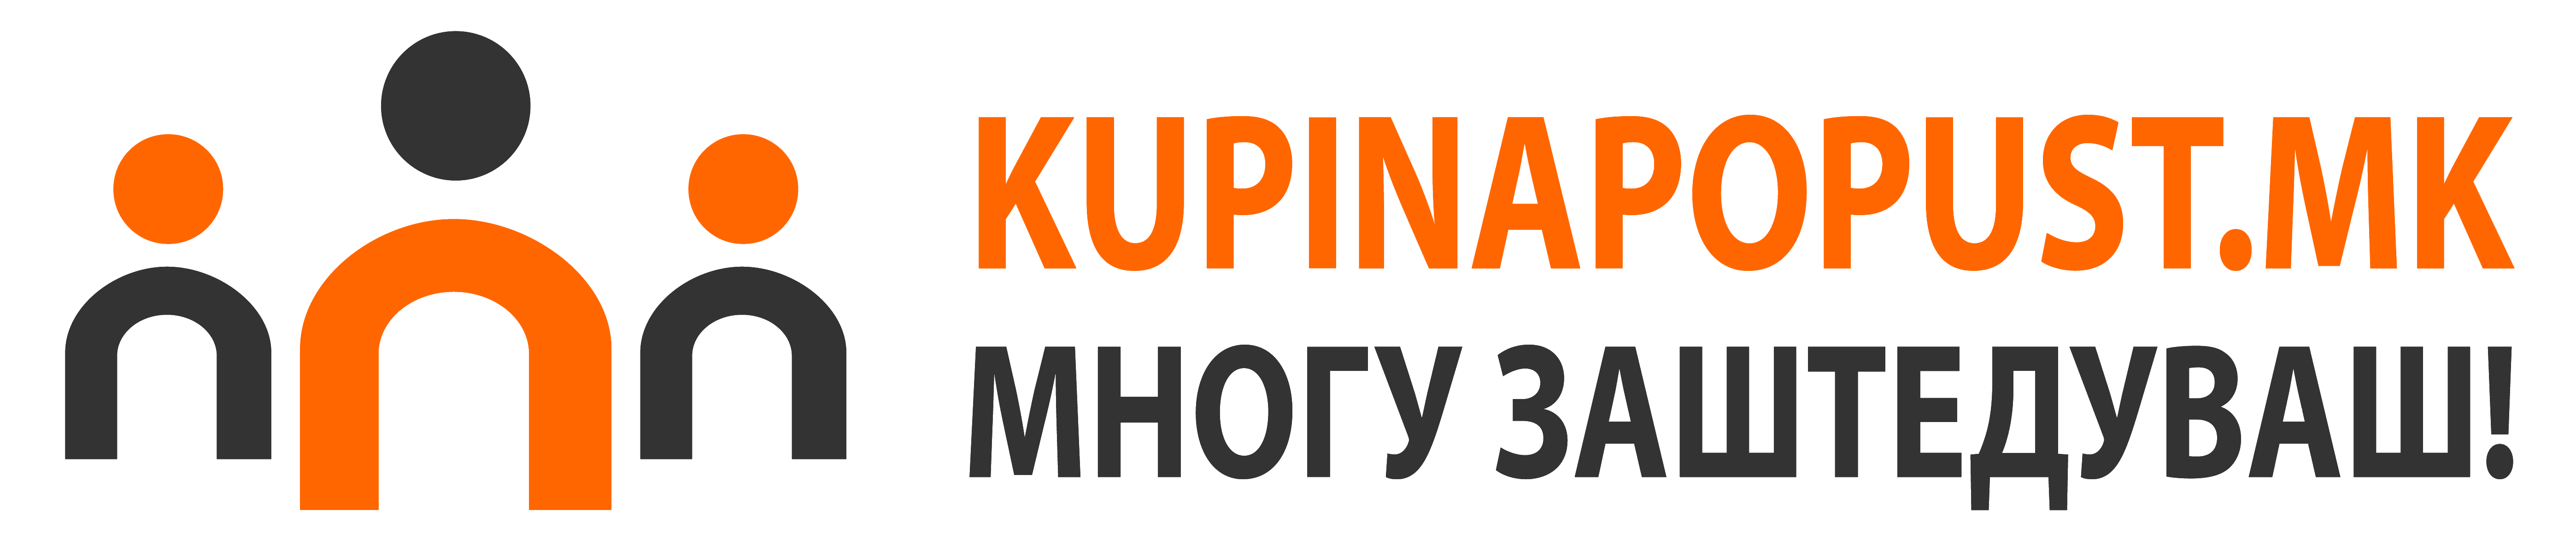 Kupinapopust.mk logo